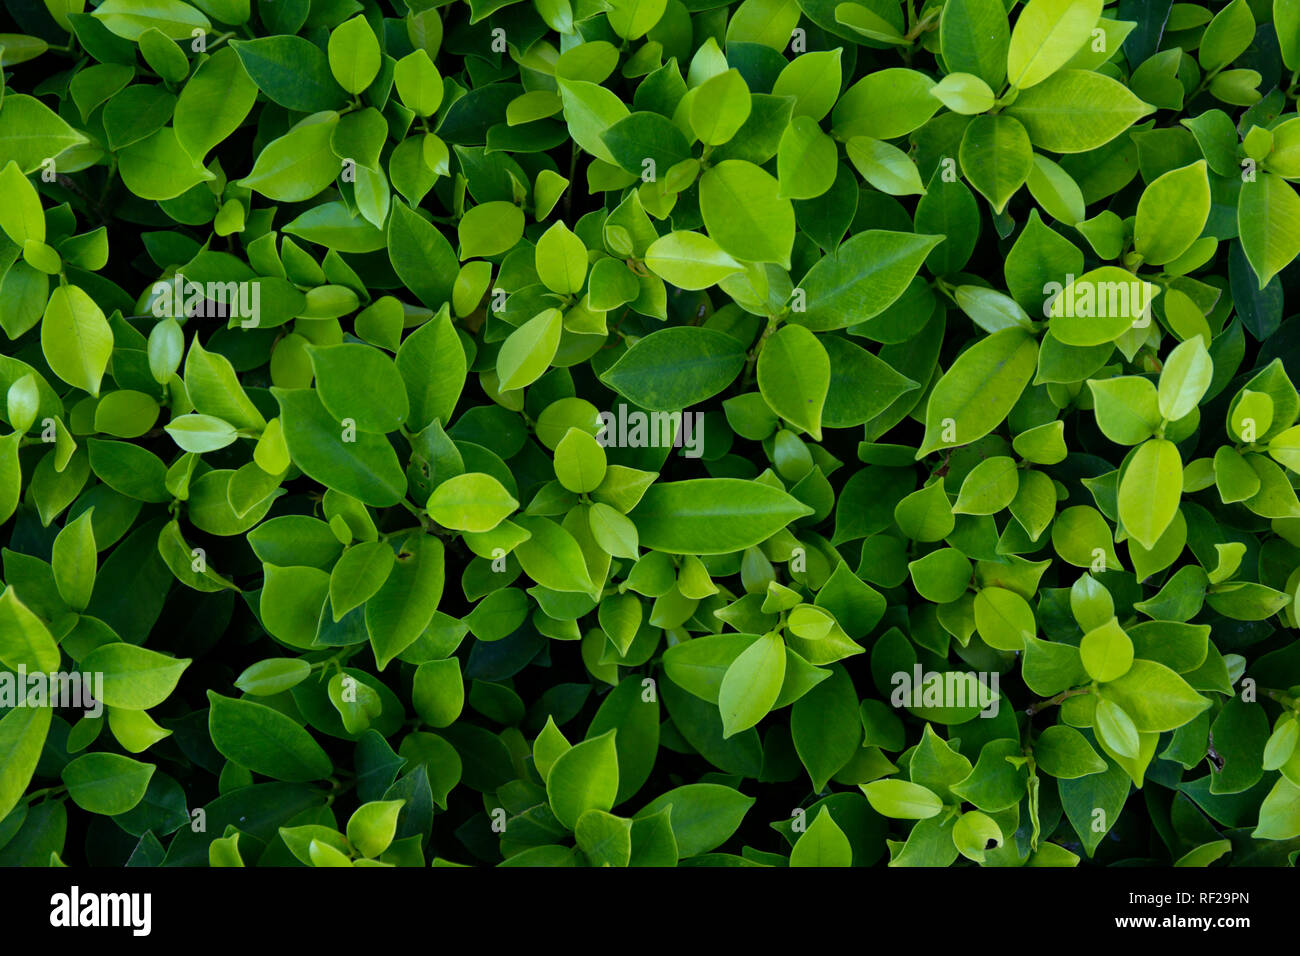 Tissu de fond vert. La texture des feuilles. Banque D'Images